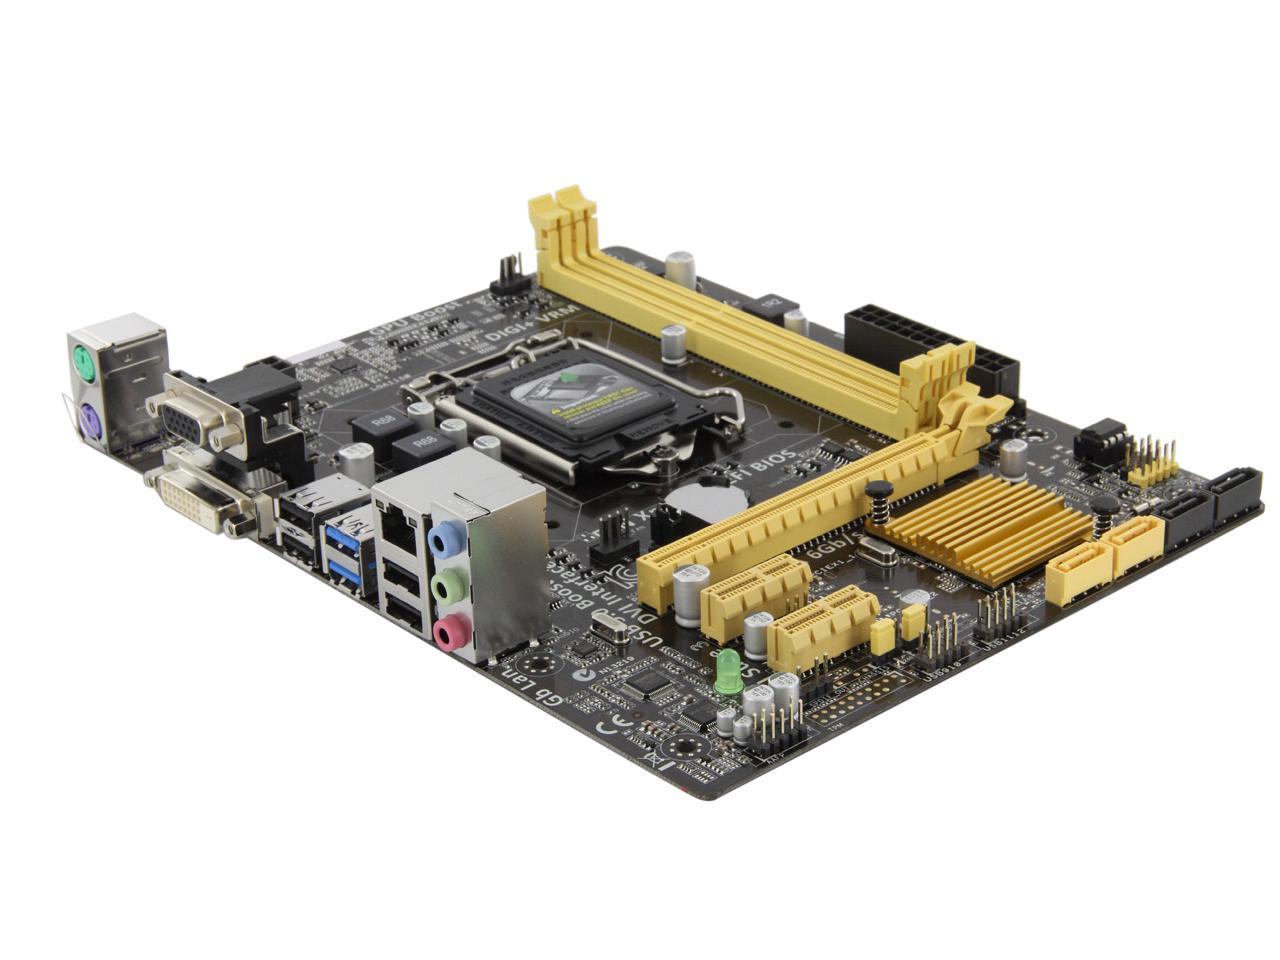 ASUS H81M-E LGA 1150 Intel H81 SATA 6Gb/s USB 3.1 uATX Intel Motherboard